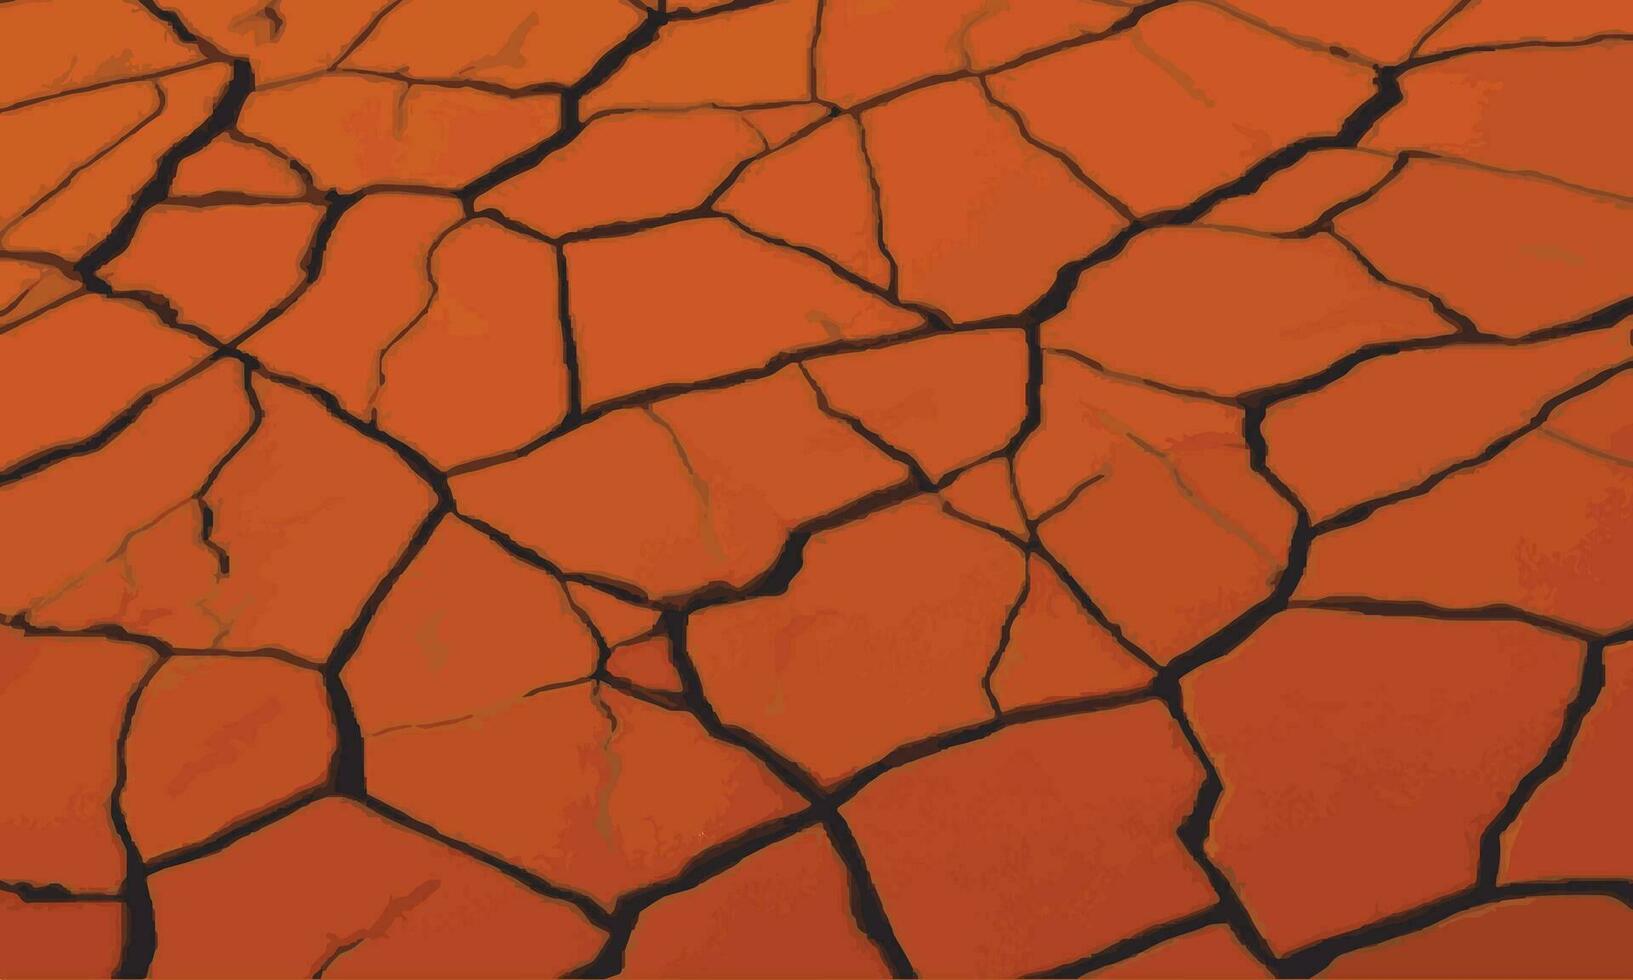 torr jord orange yta knäckt jord textur bakgrund. orange torr jord detalj vektor illustration